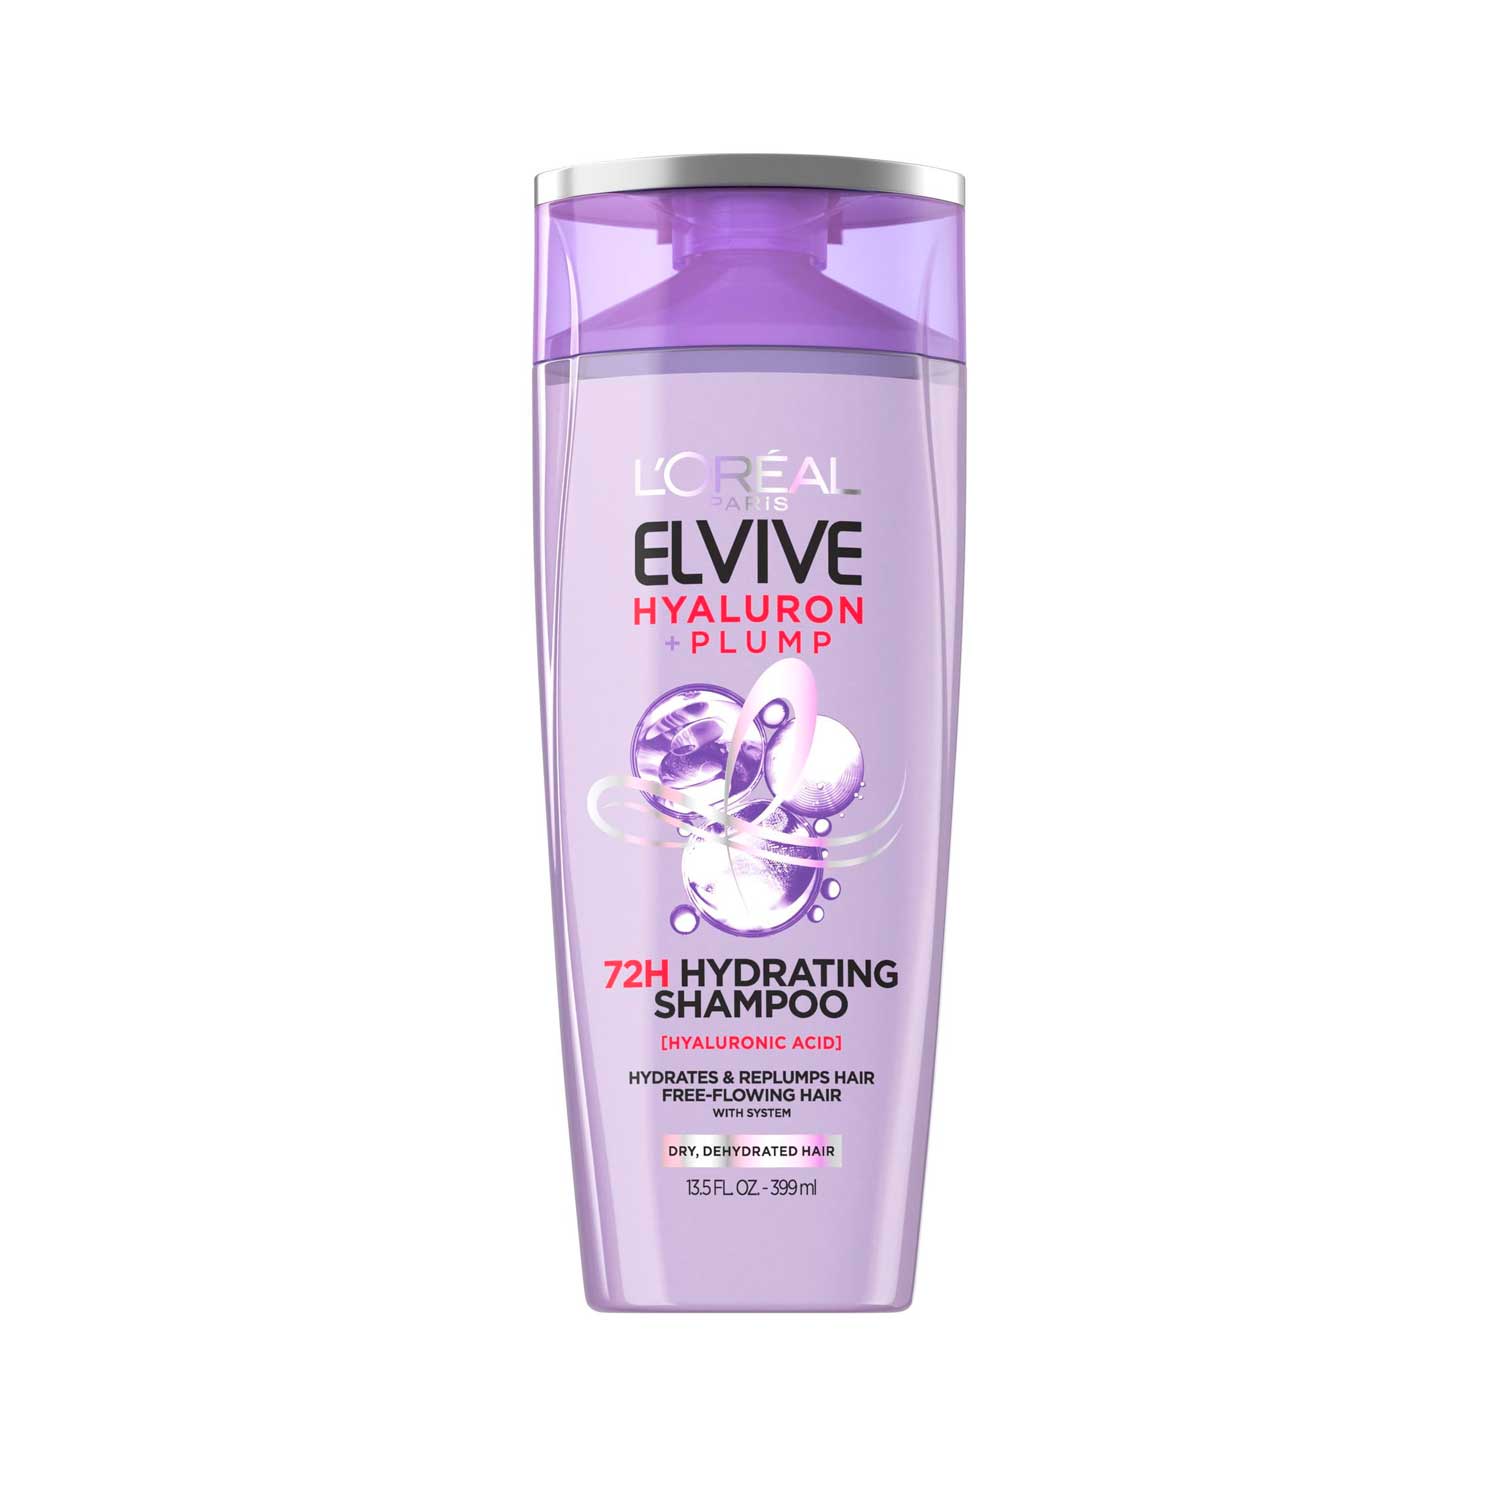 Shampoo Elvive Hyaluron Plump 72H de Hidratación. 399 ml